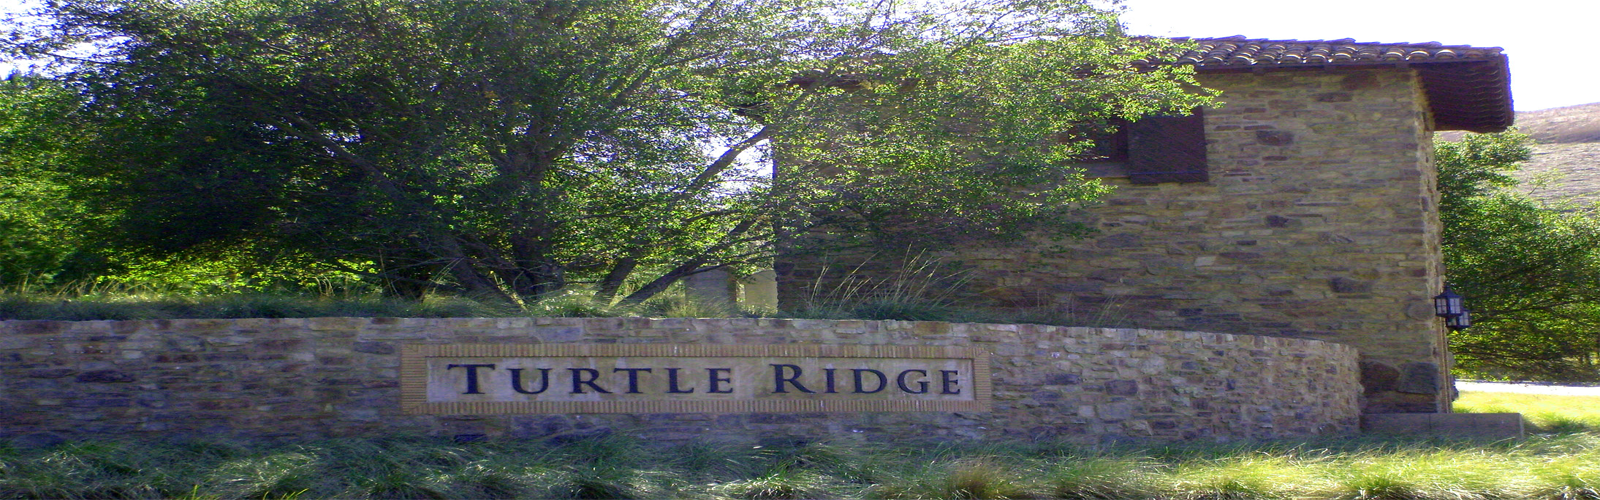 Turtle Ridge